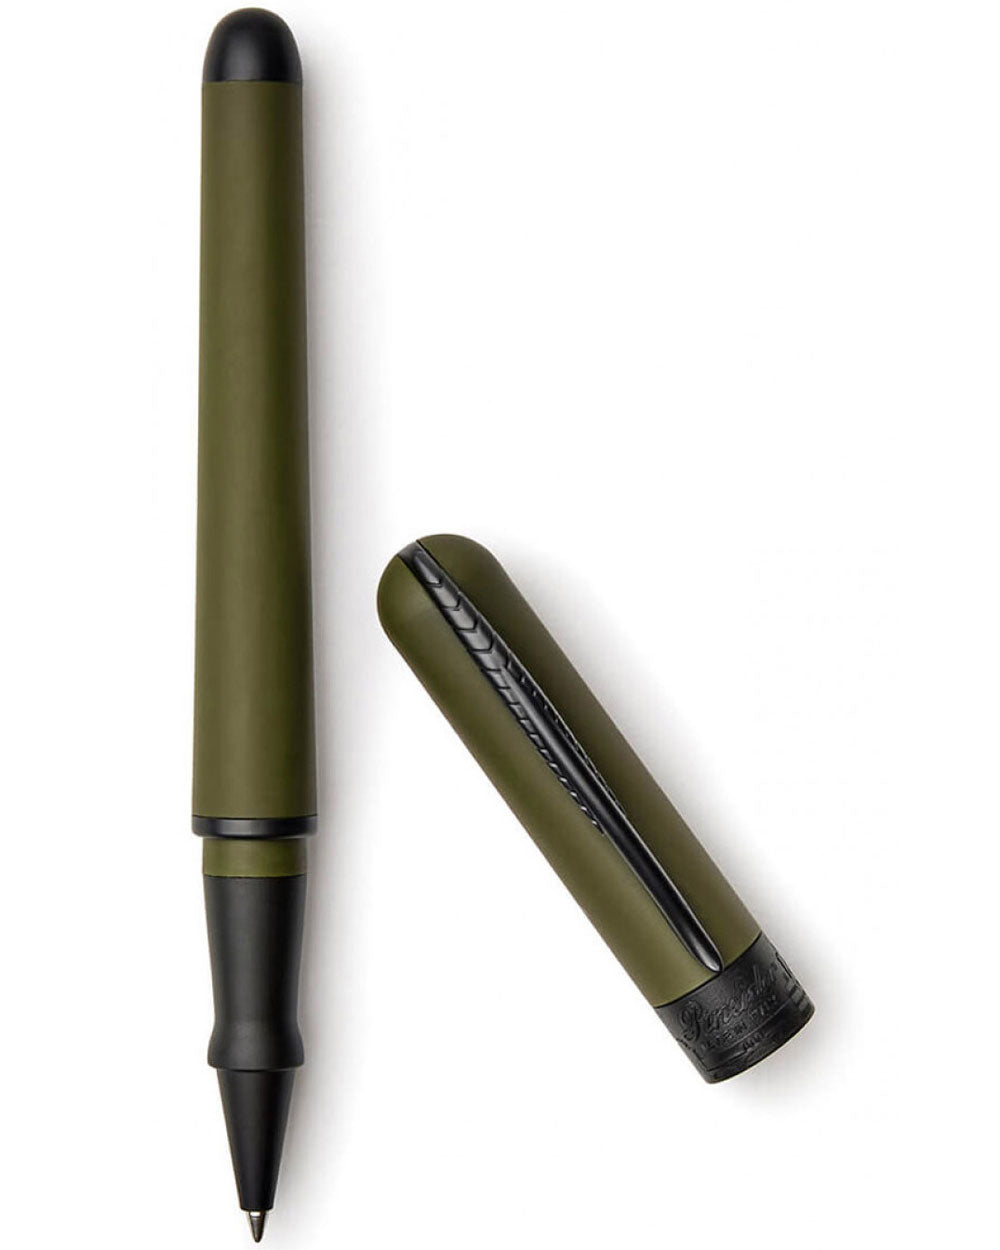 Avatar UR Matte Rollerball Pen in Military